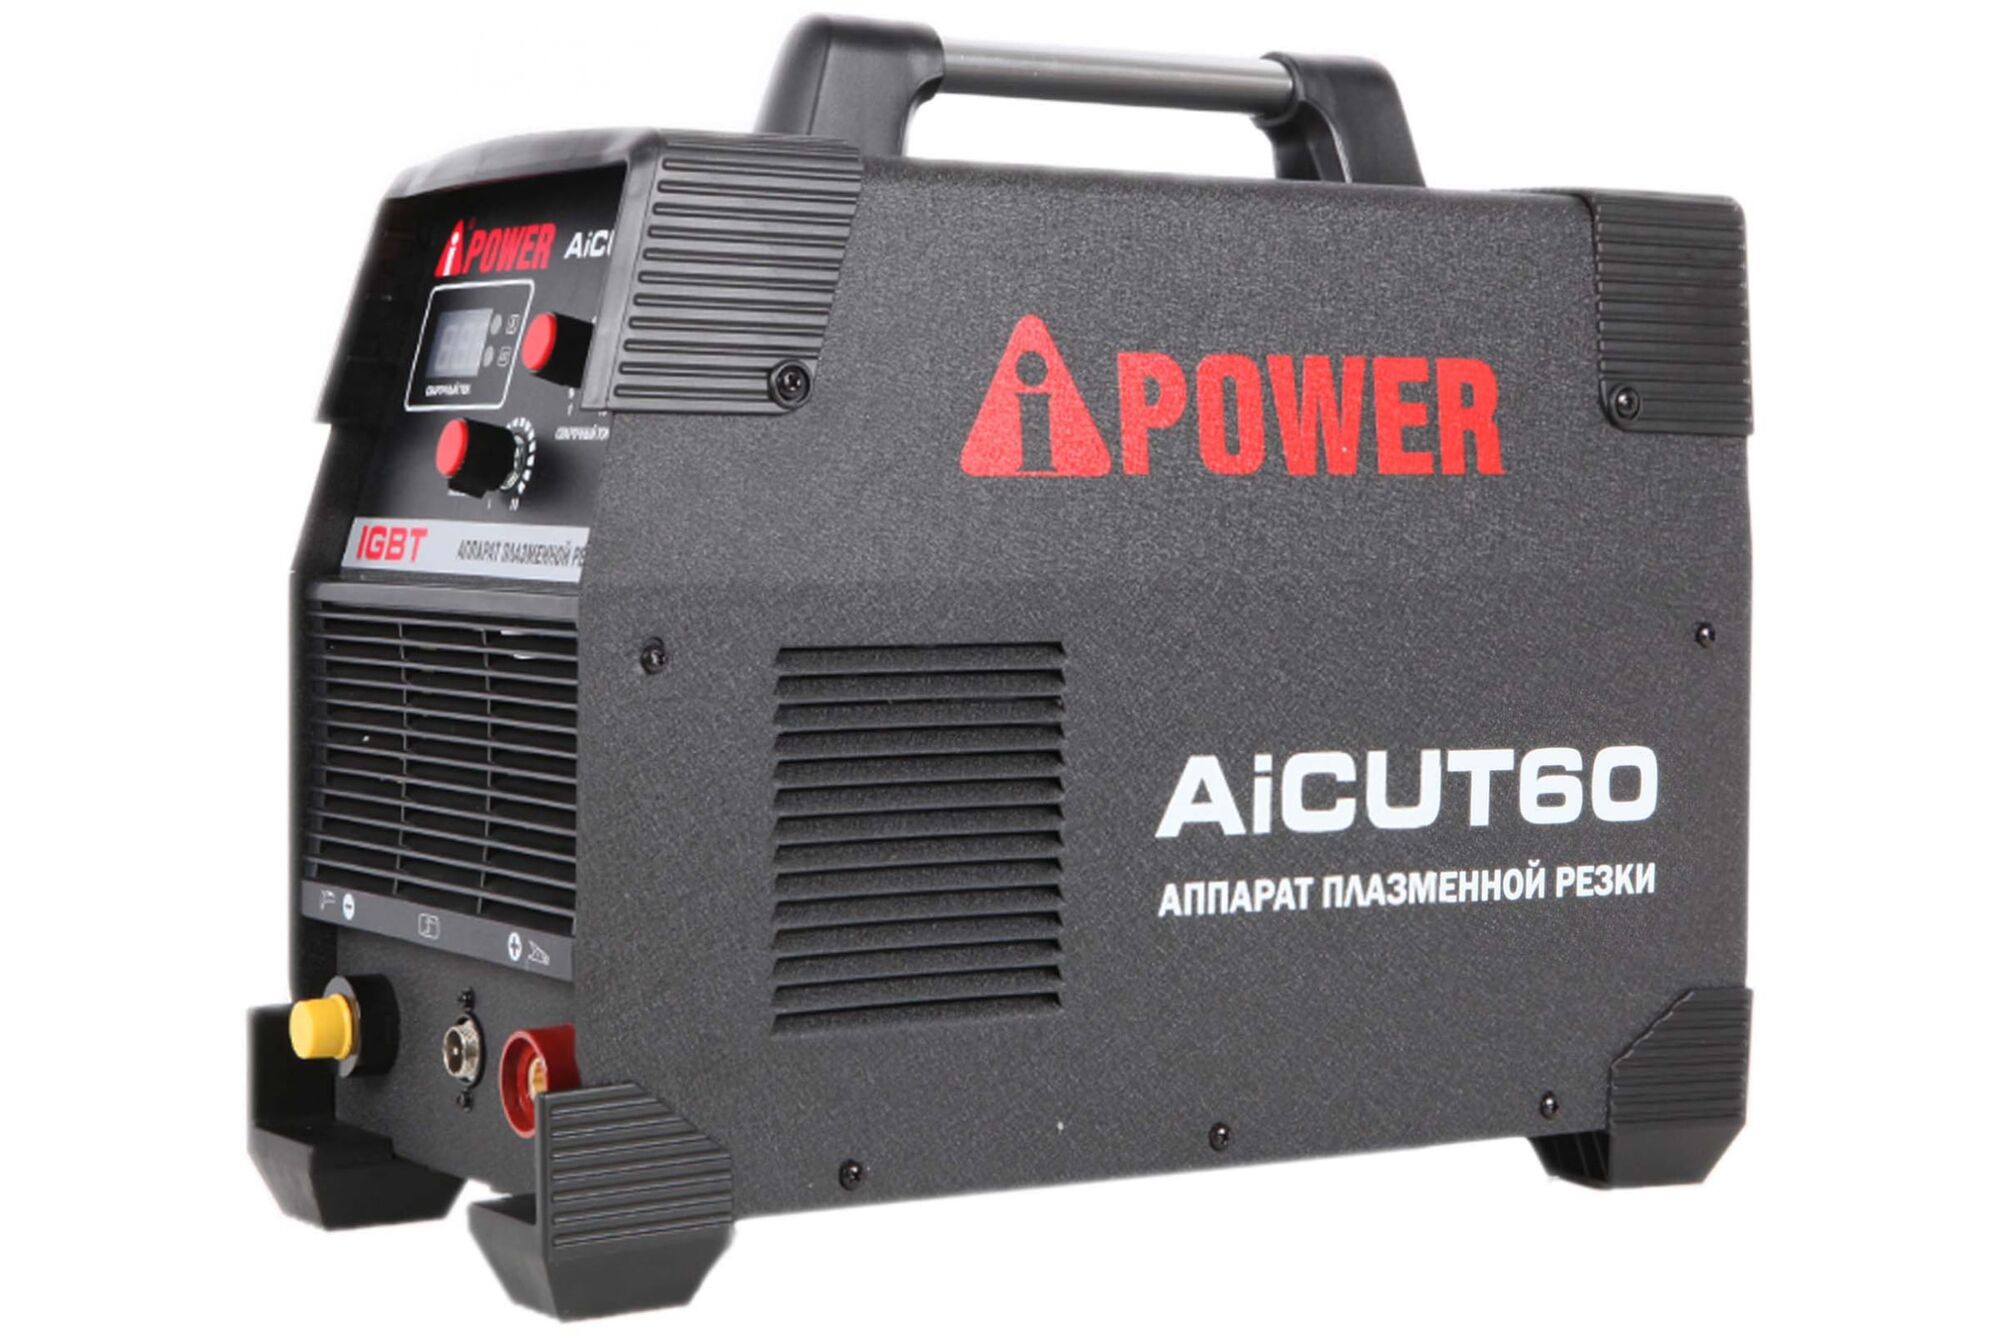 Аппарат плазменной резки A-iPower AiCUT60 63060 Энергия